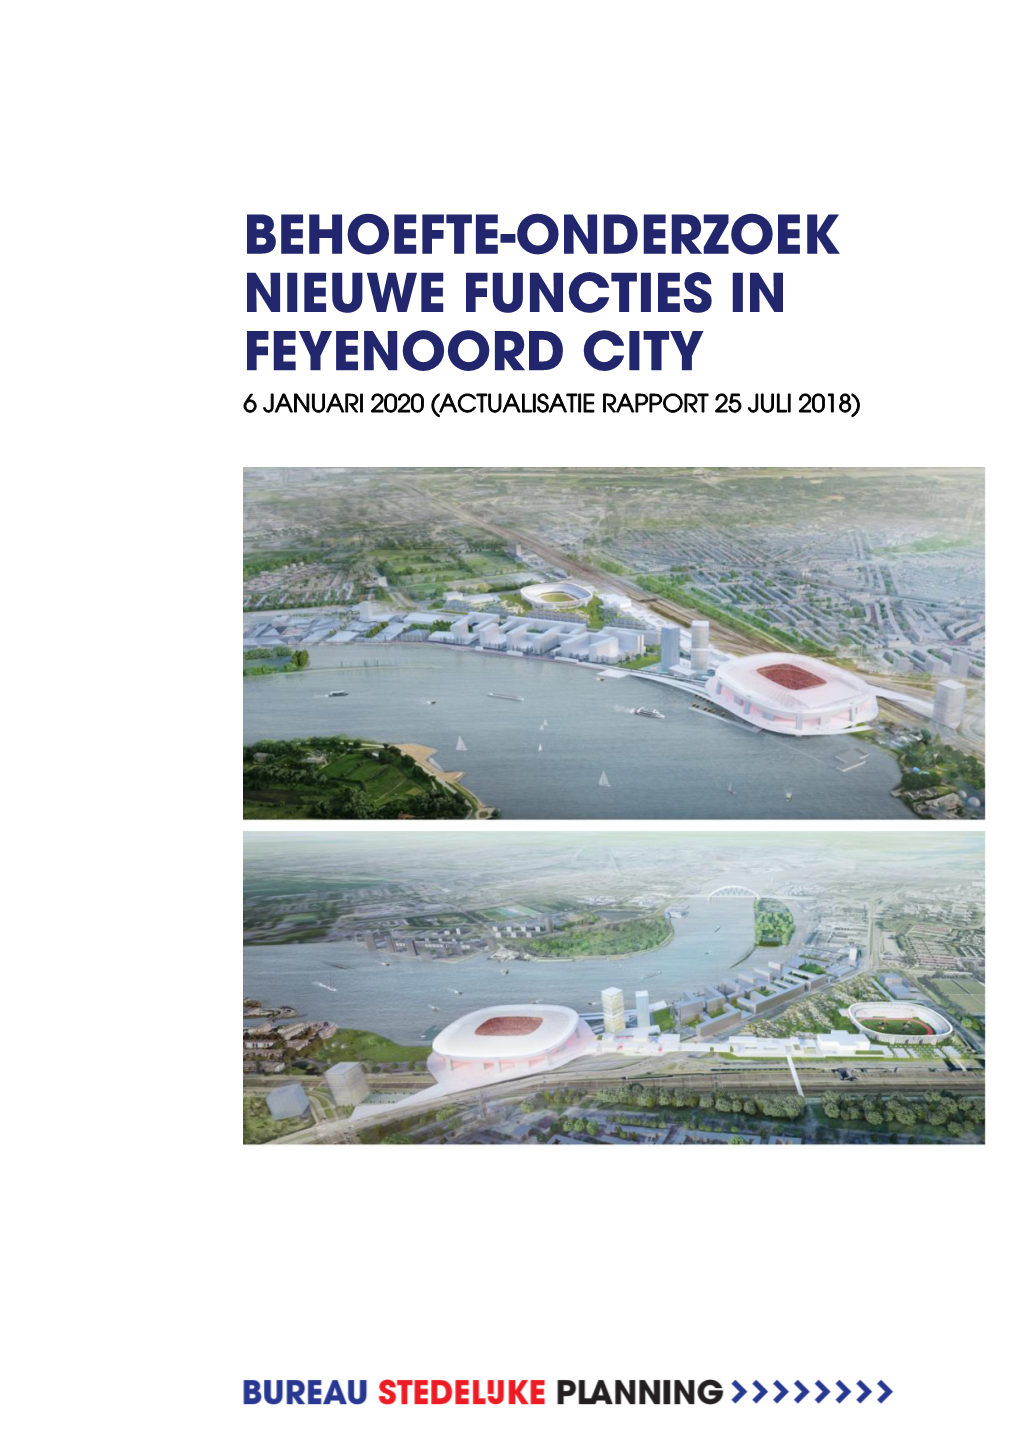 Bijlage 3 Behoefteonderzoek Feyenoord City